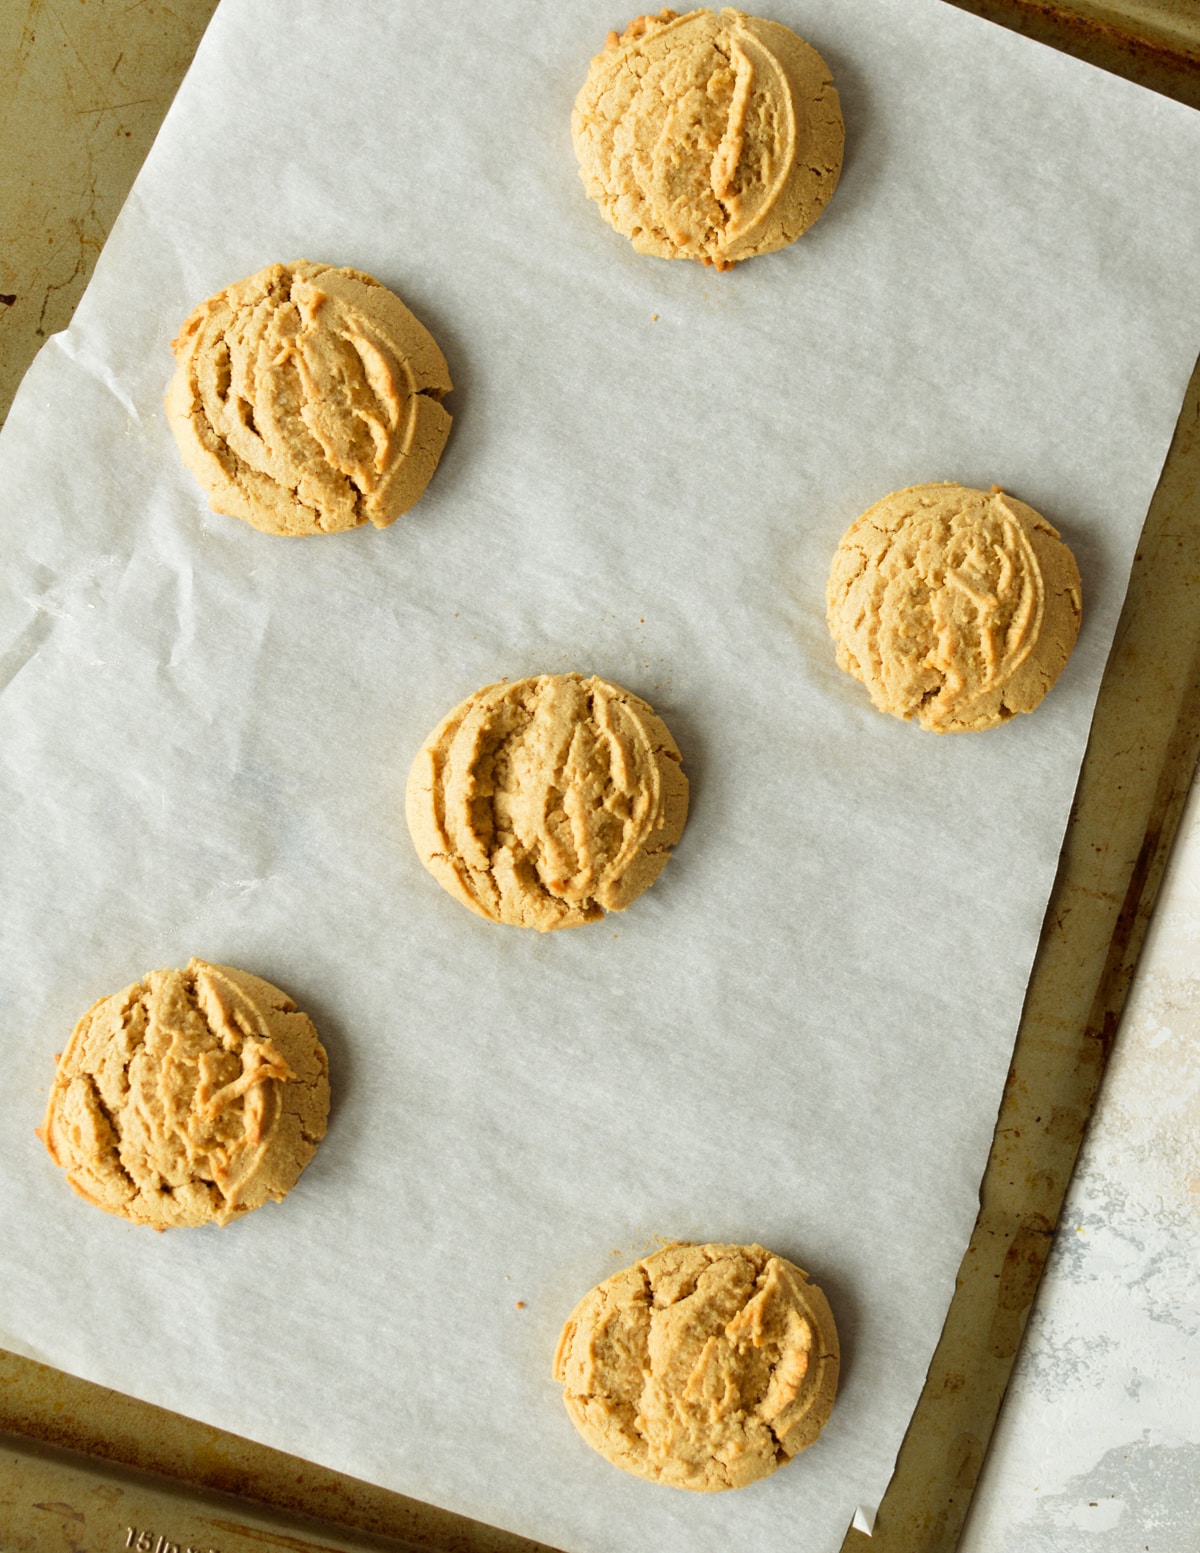 peanut butter cookies on sheet pan.